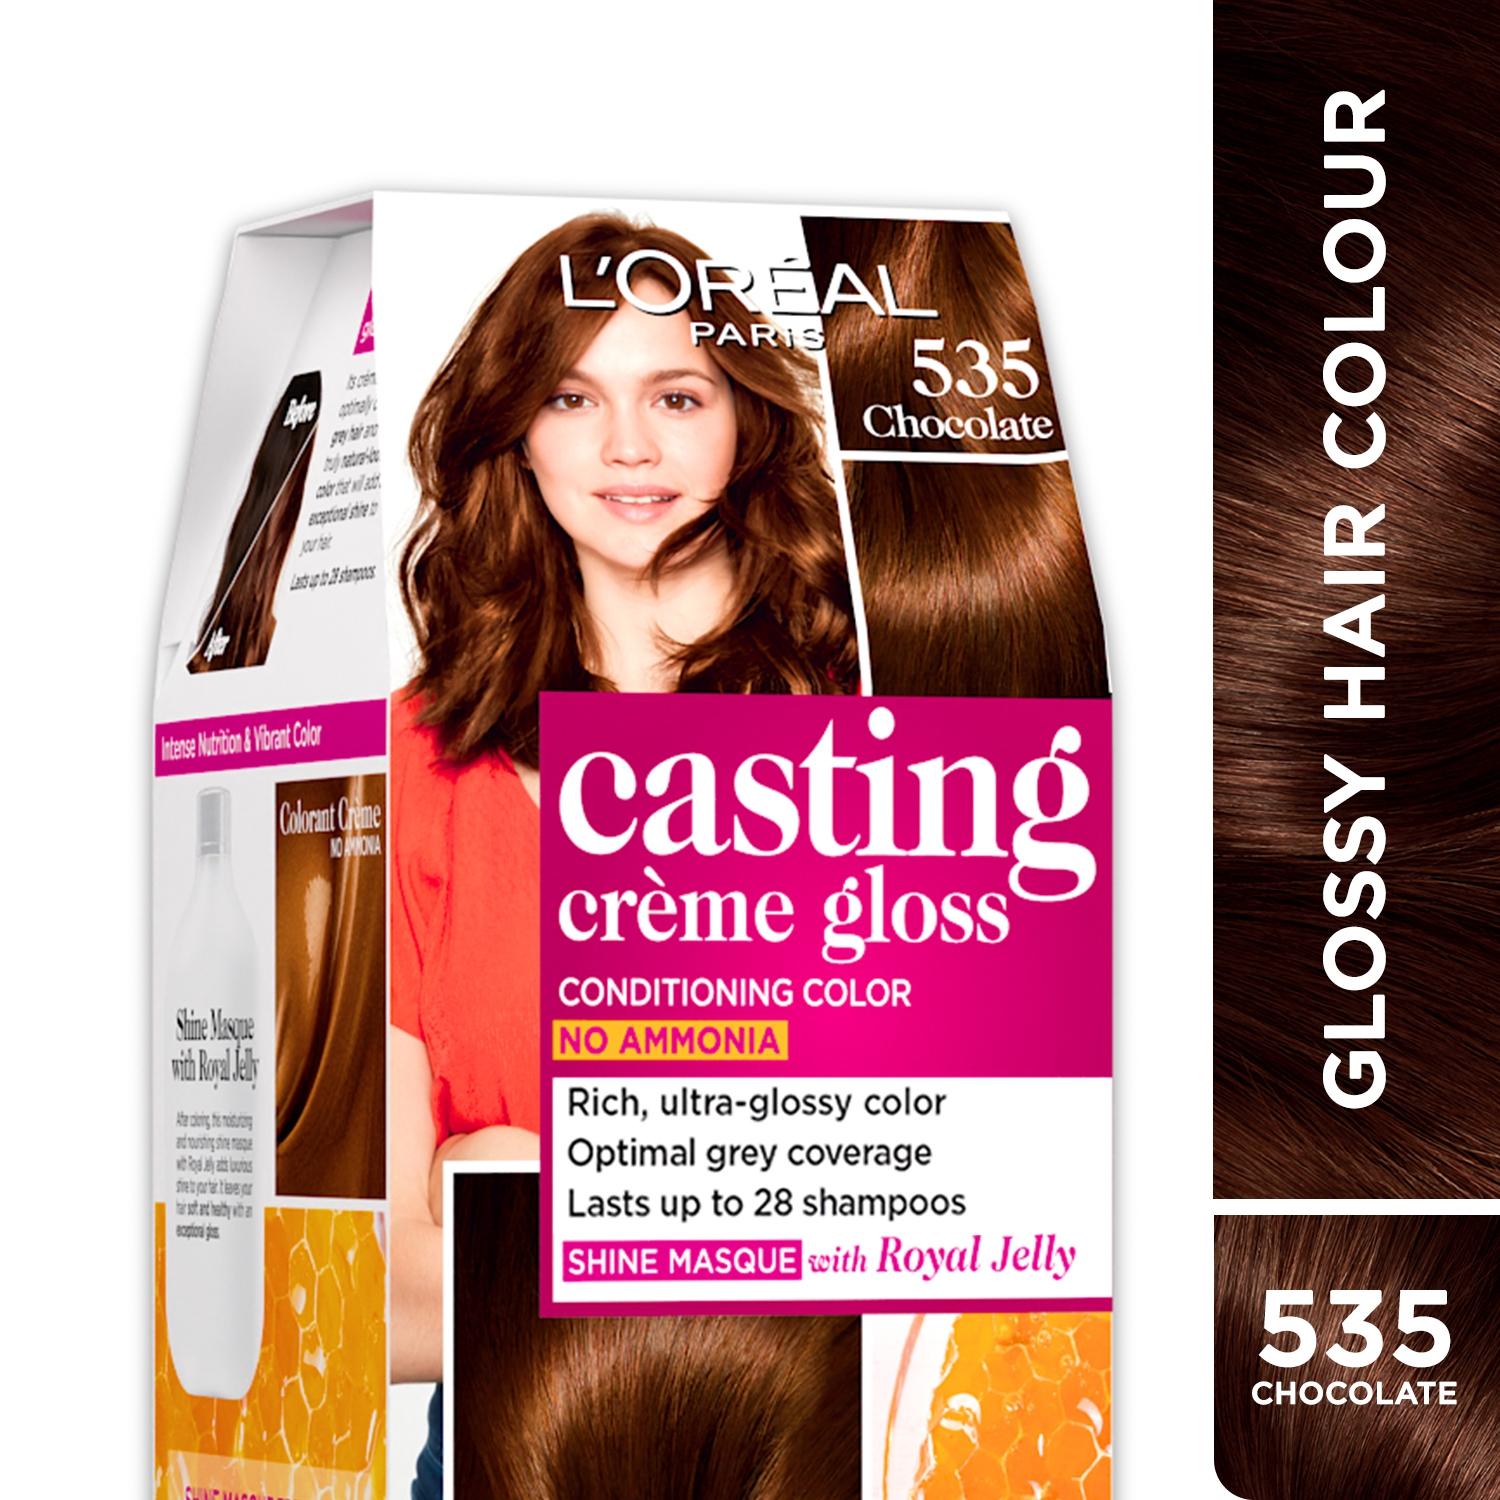 l'oreal paris casting creme gloss hair color, 535 chocolate, 87.5g+72ml